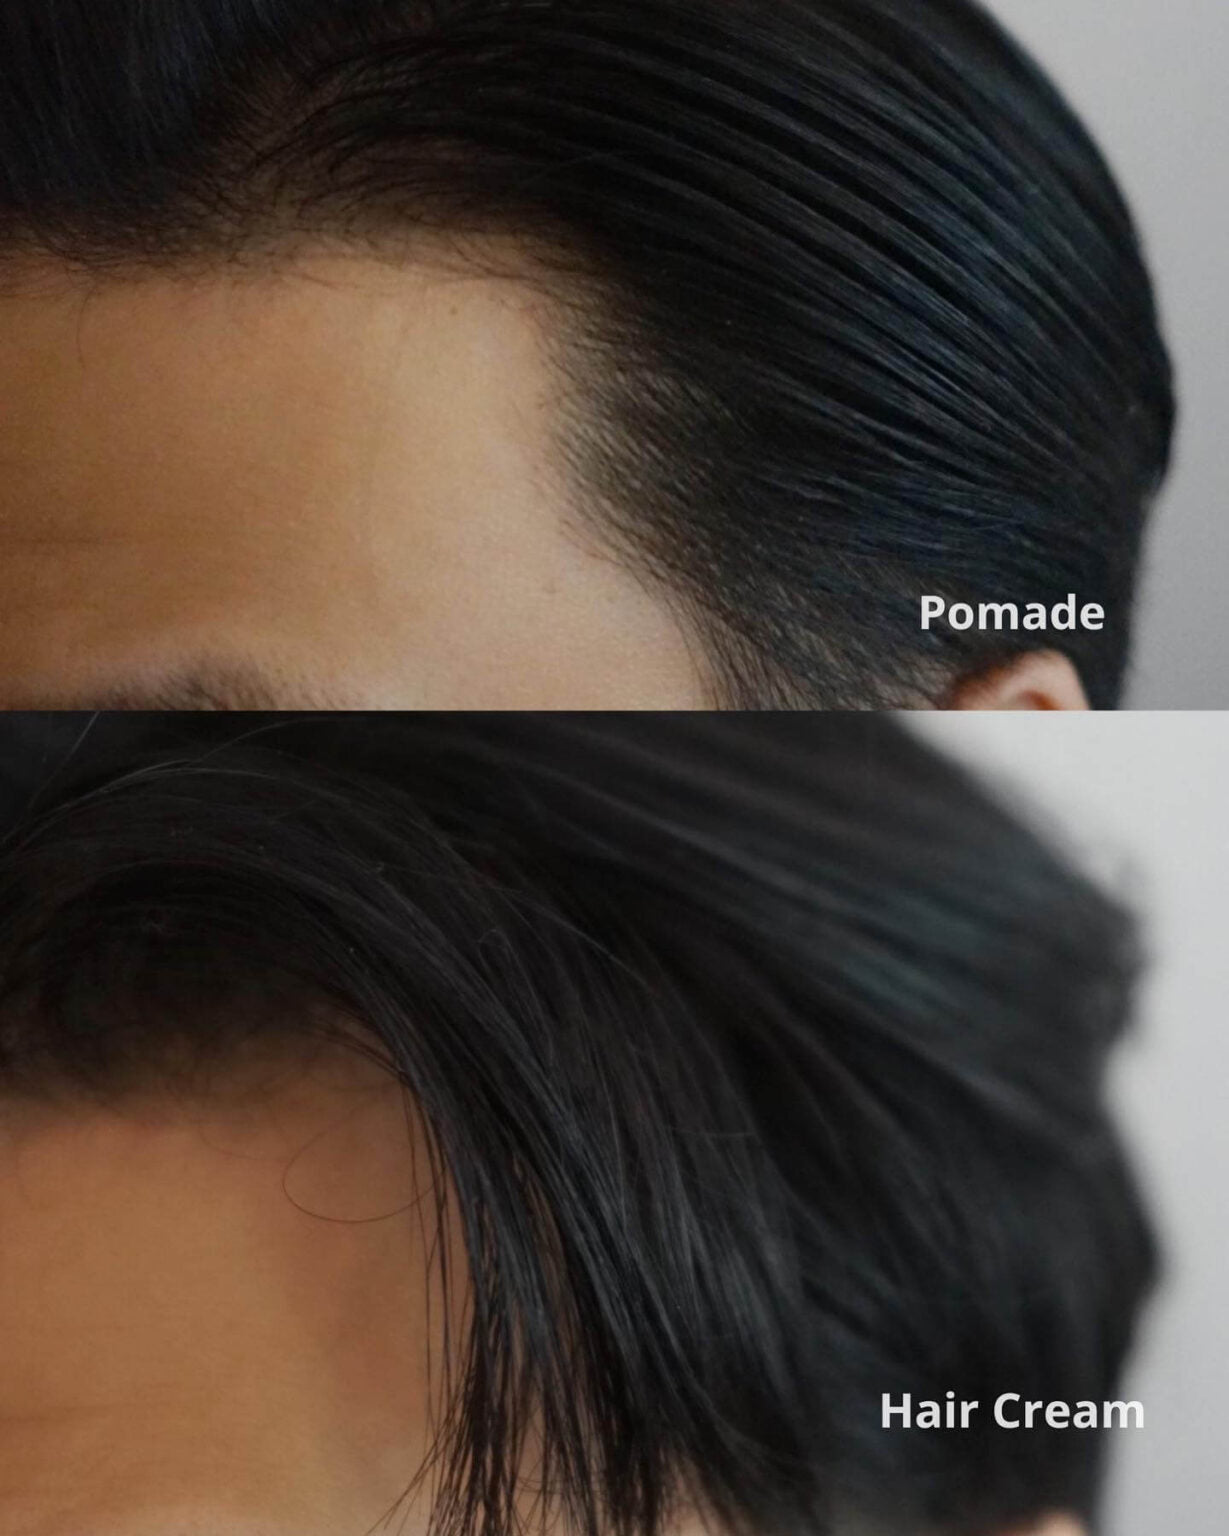 Pomp & Co Hair Cream 120ml